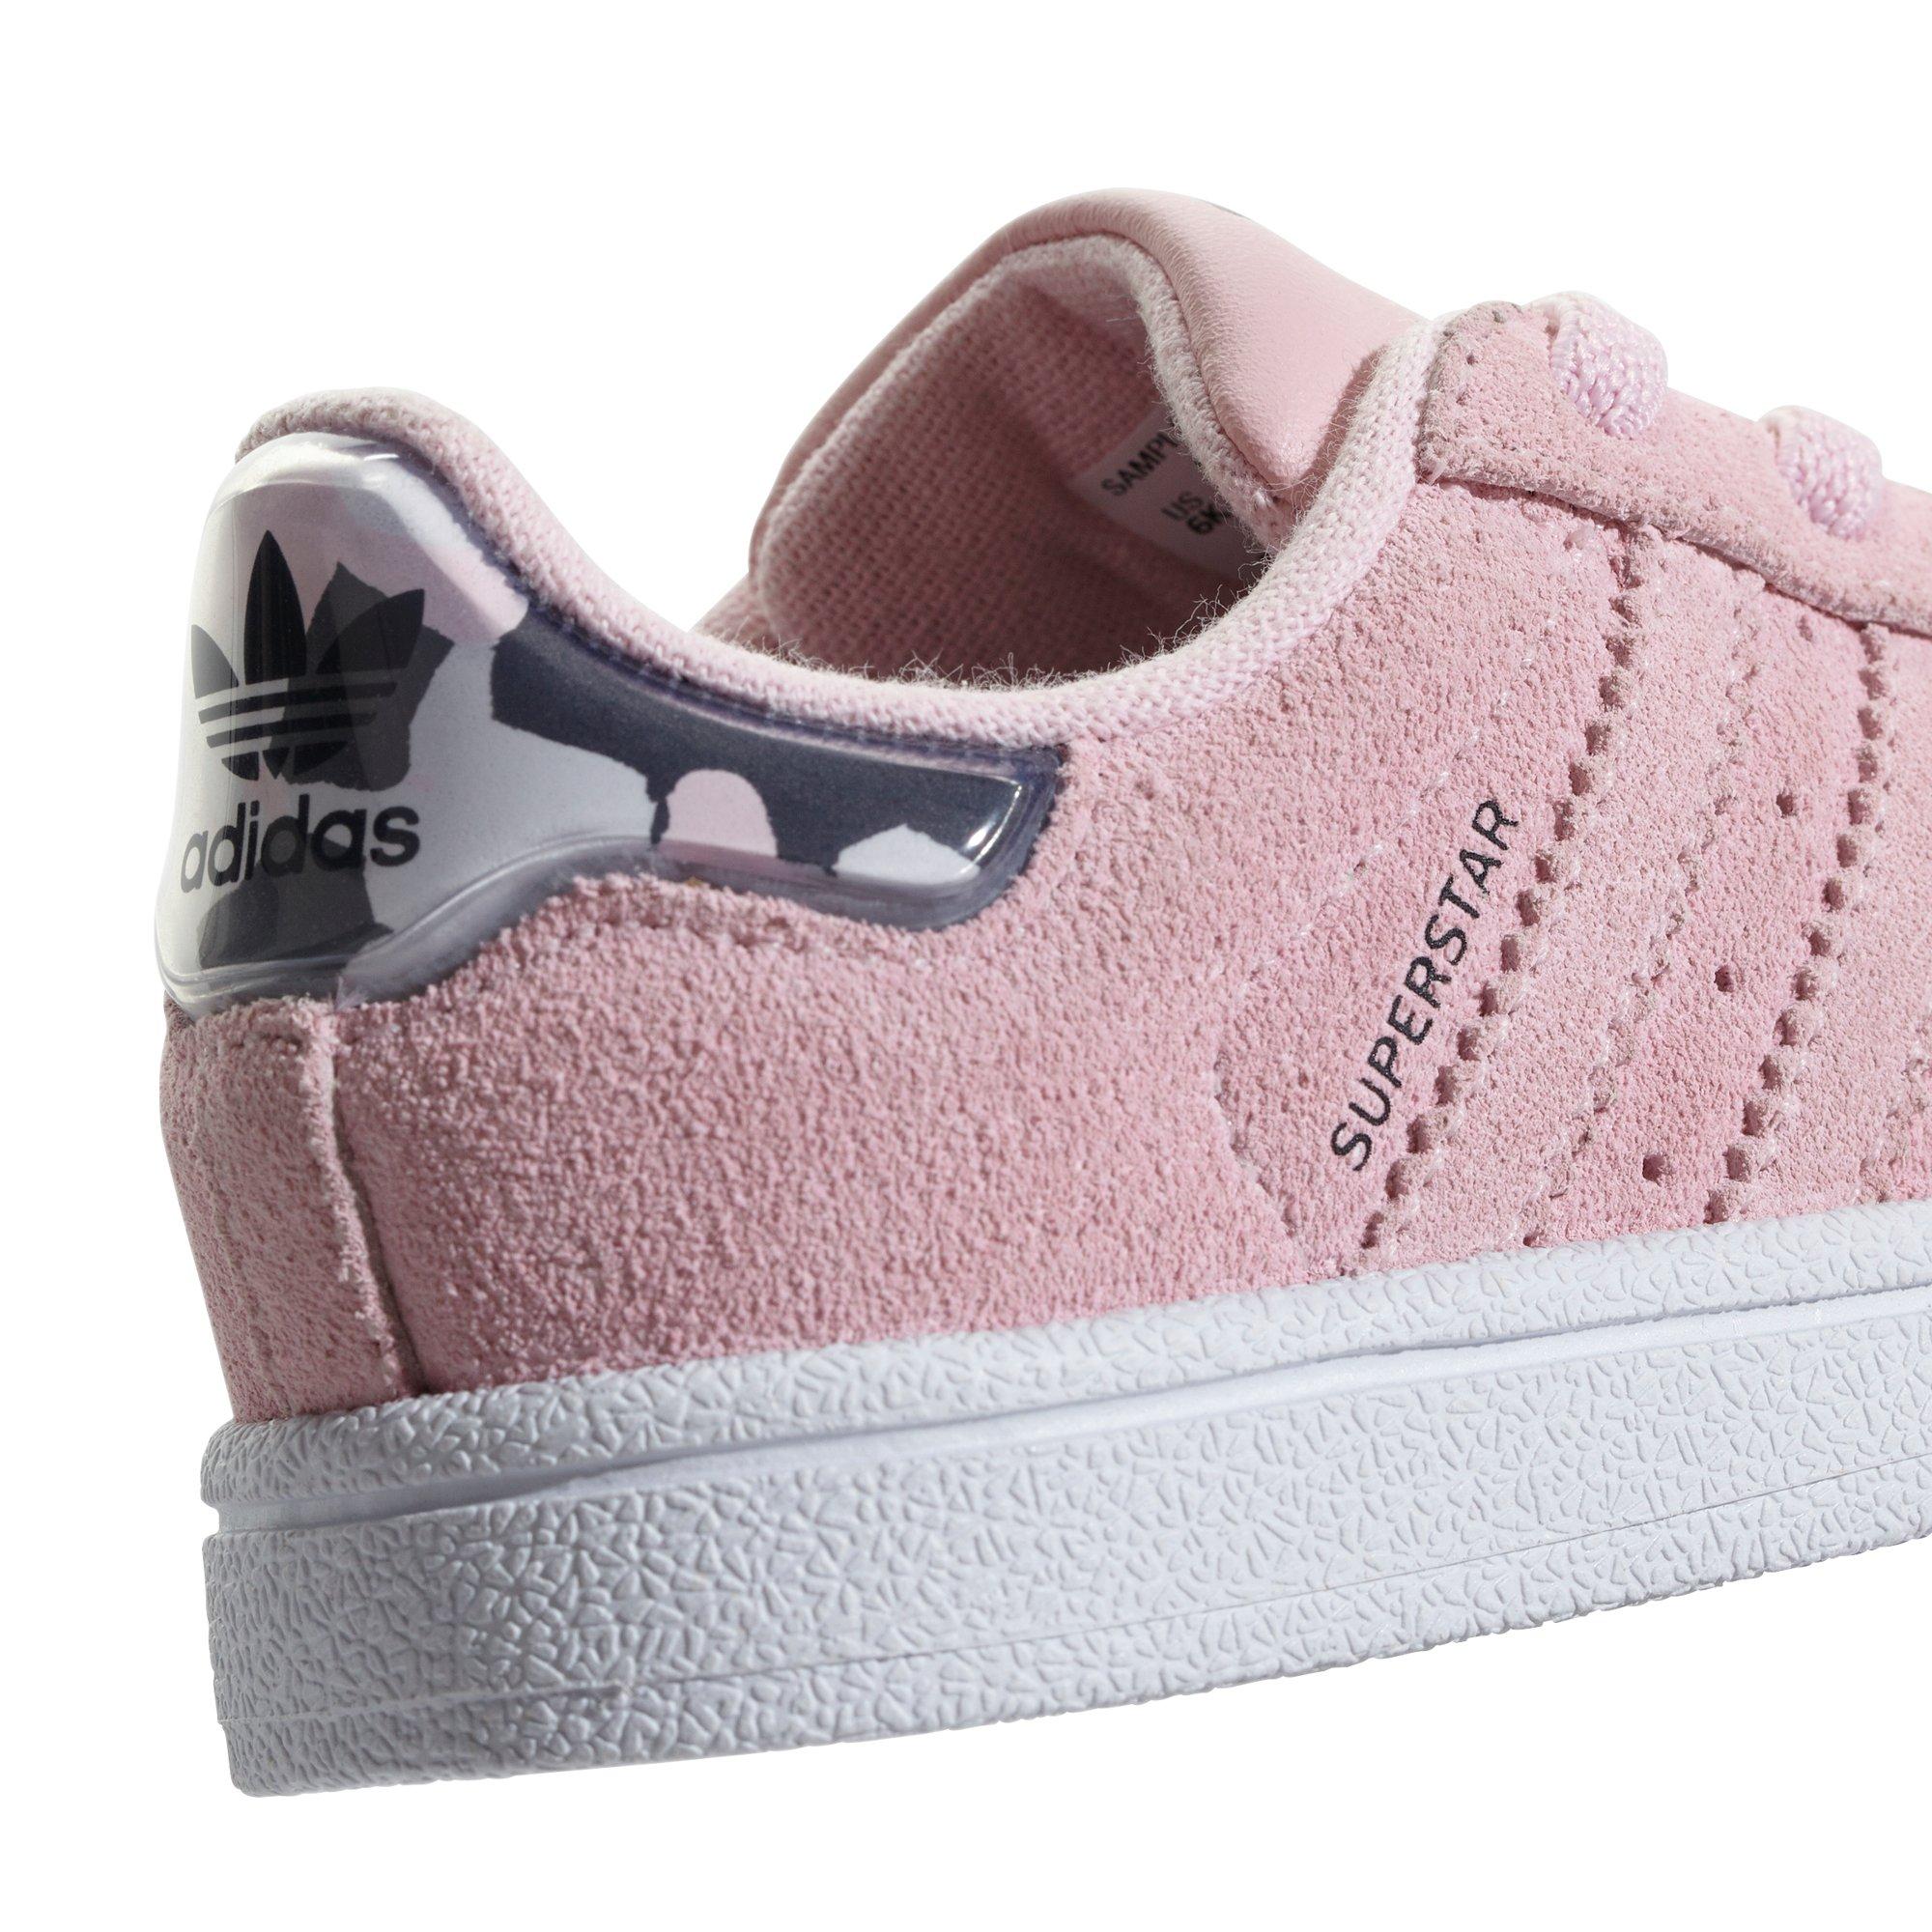 toddler adidas superstar pink